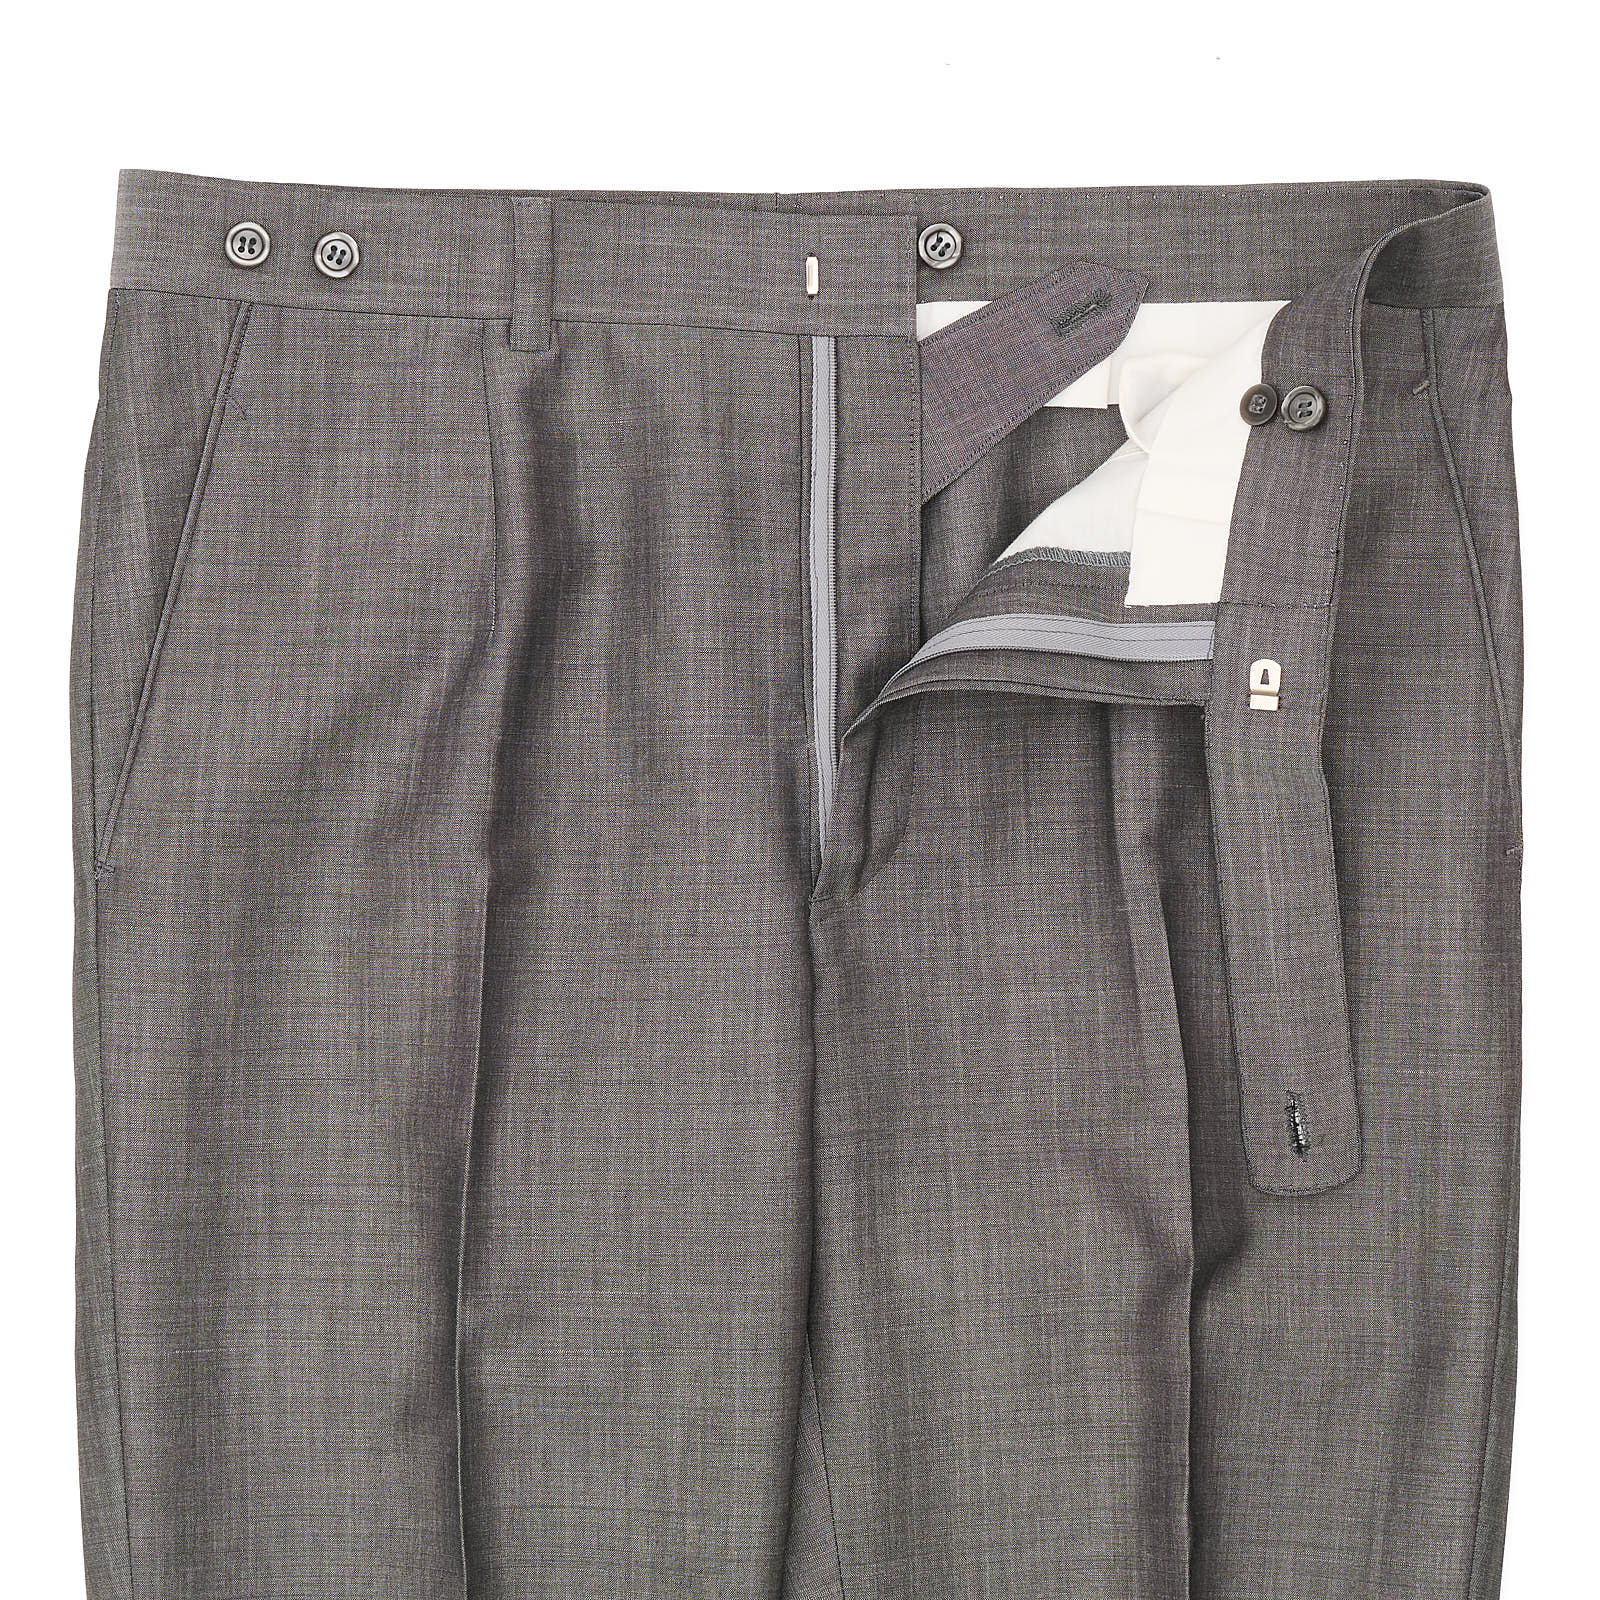 BESPOKE ATHENS Handmade Gray Wool-Mohair Flat Front Pants EU 50 NEW US 34